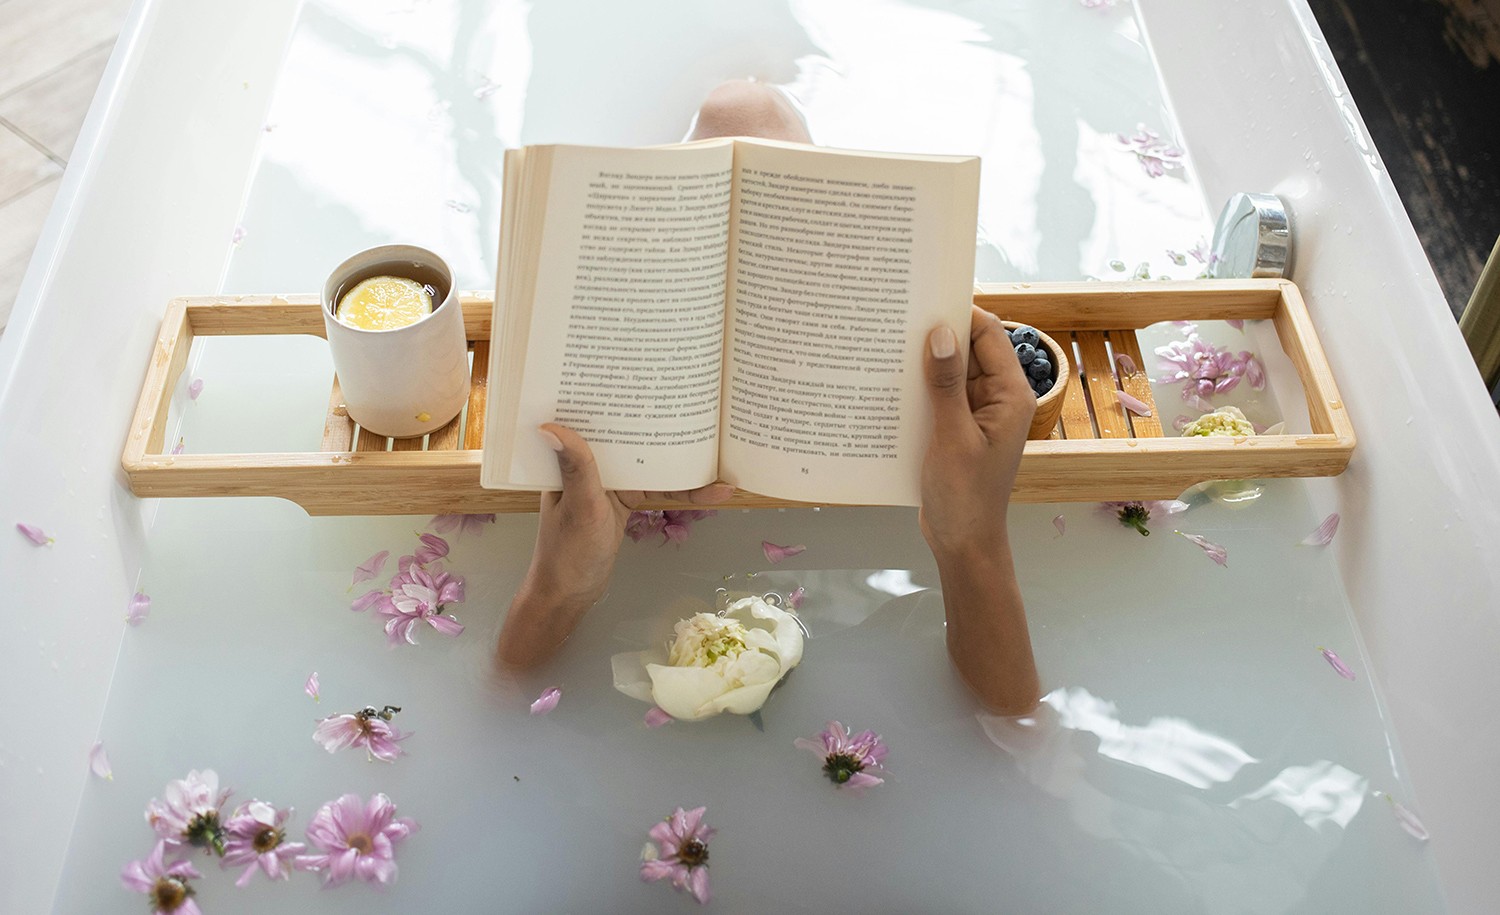 A woman reads a book in the bathtub